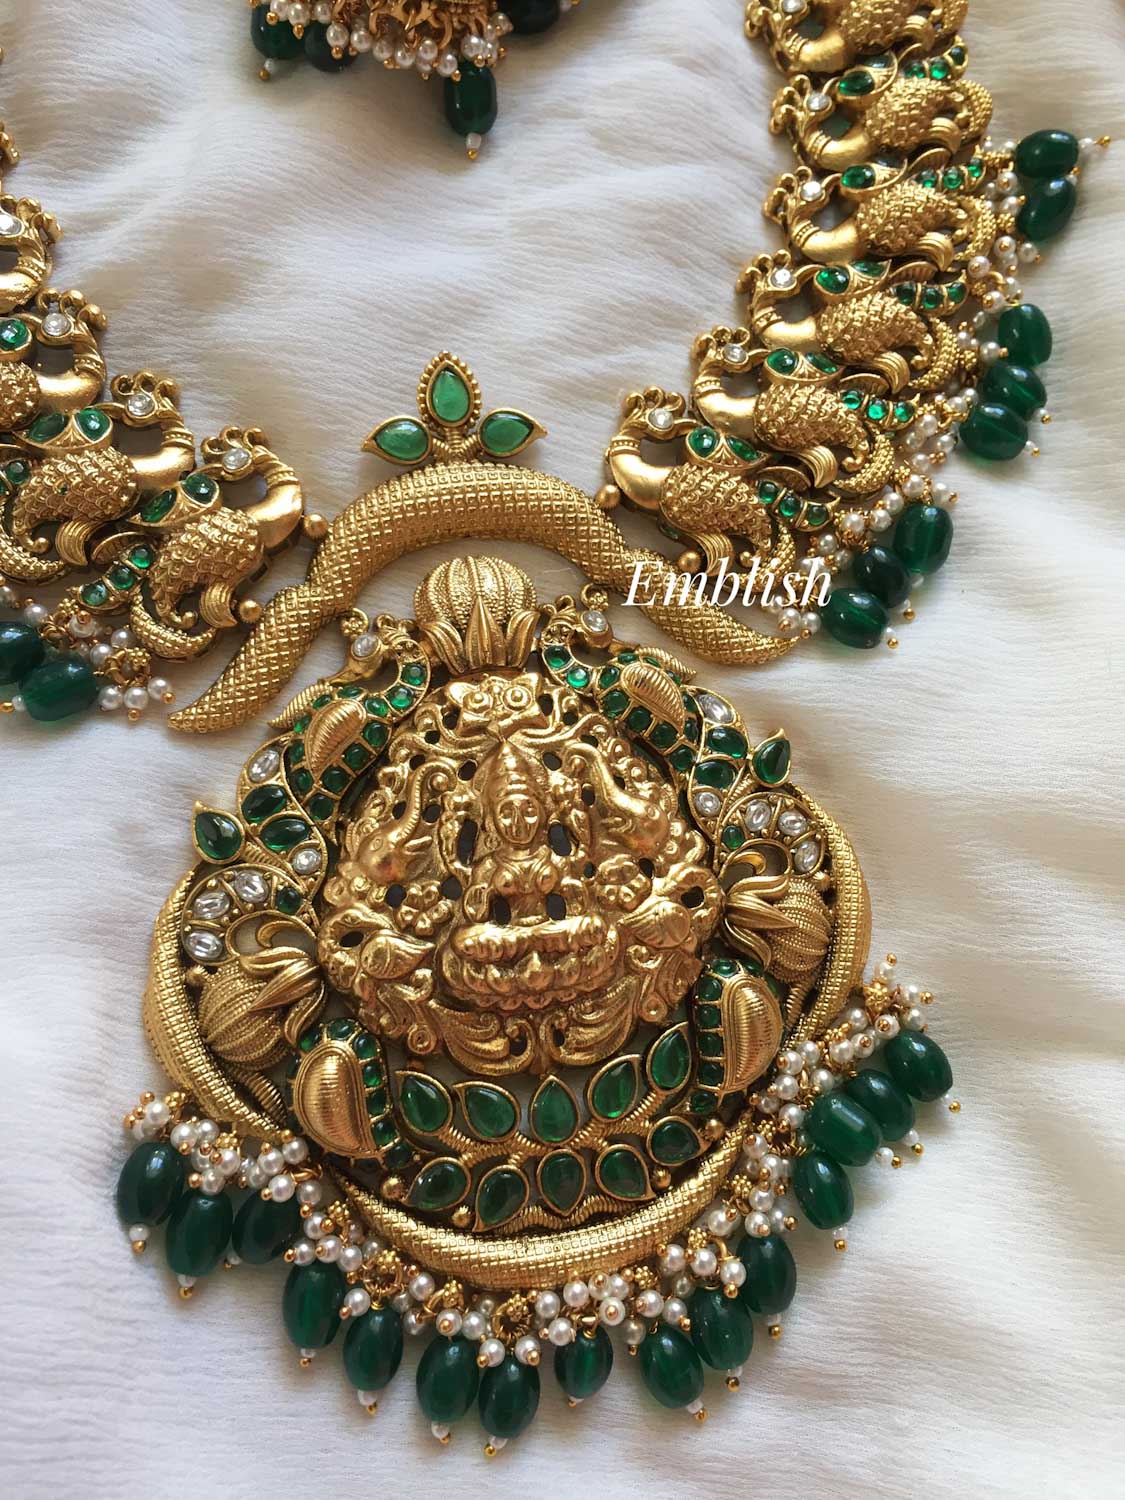 Gold alike Lakshmi with Double Peacock Long Neckpiece - Green Beads.